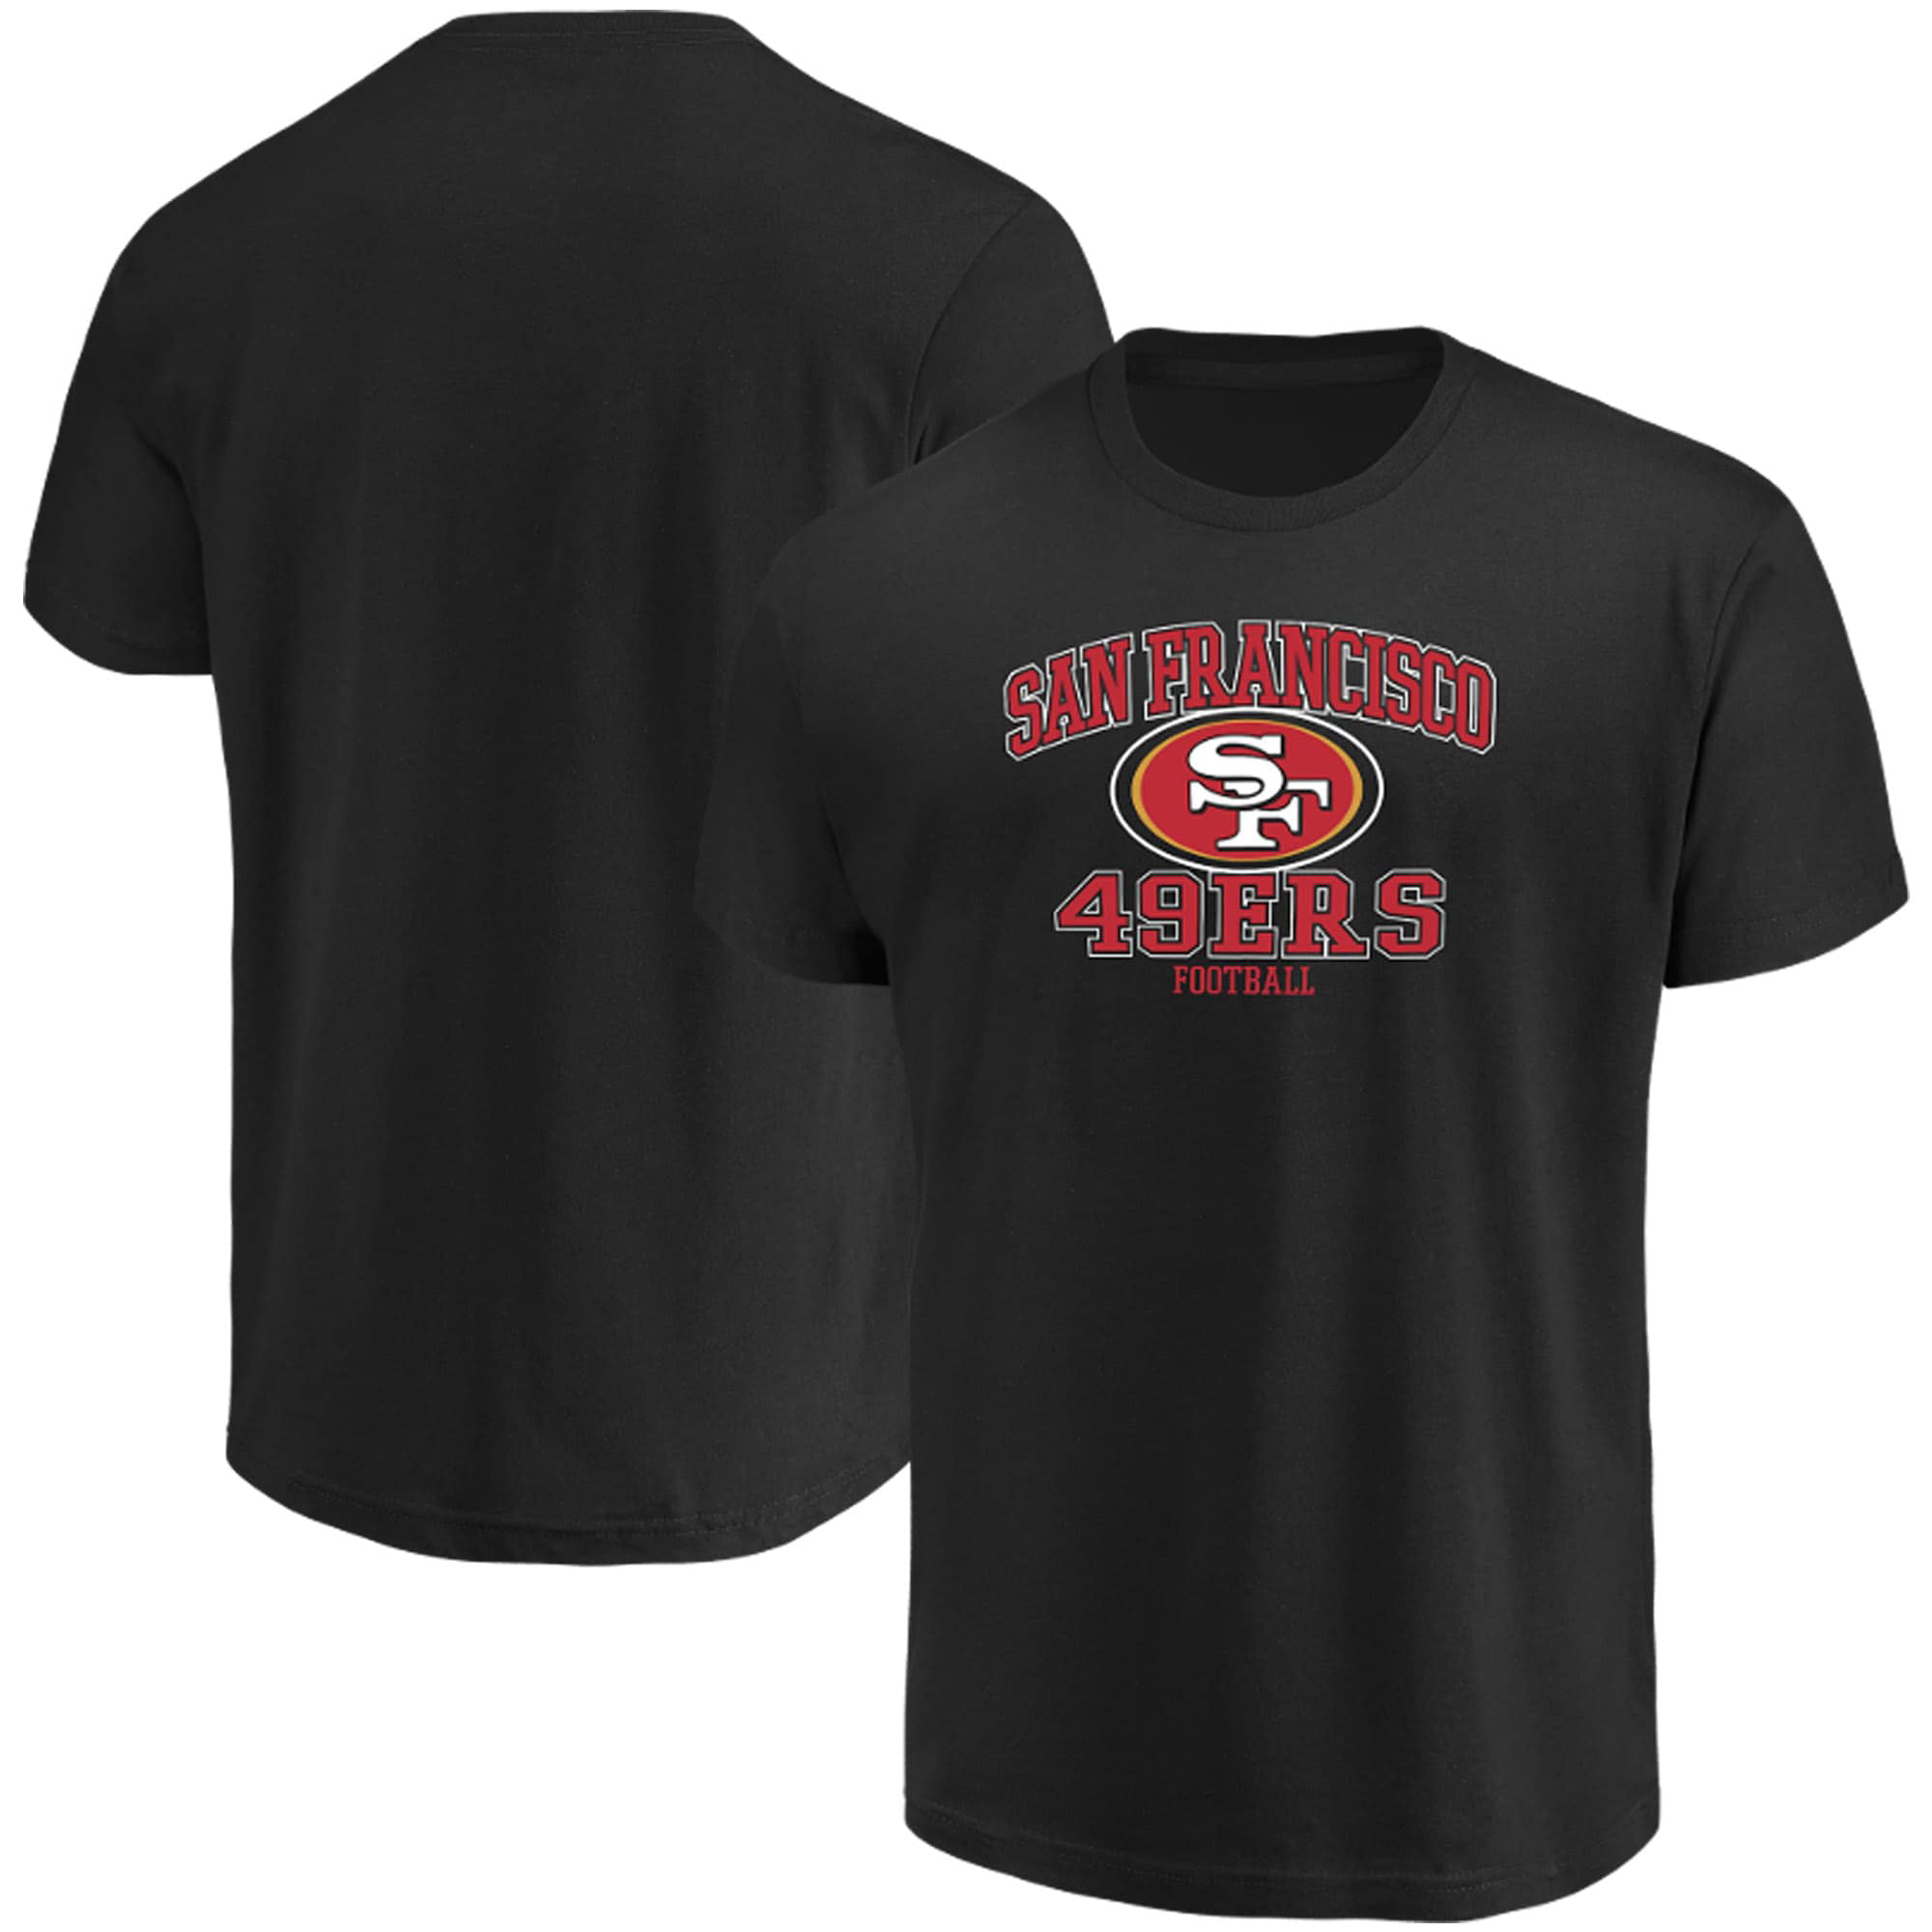 san francisco 49ers men's t shirts